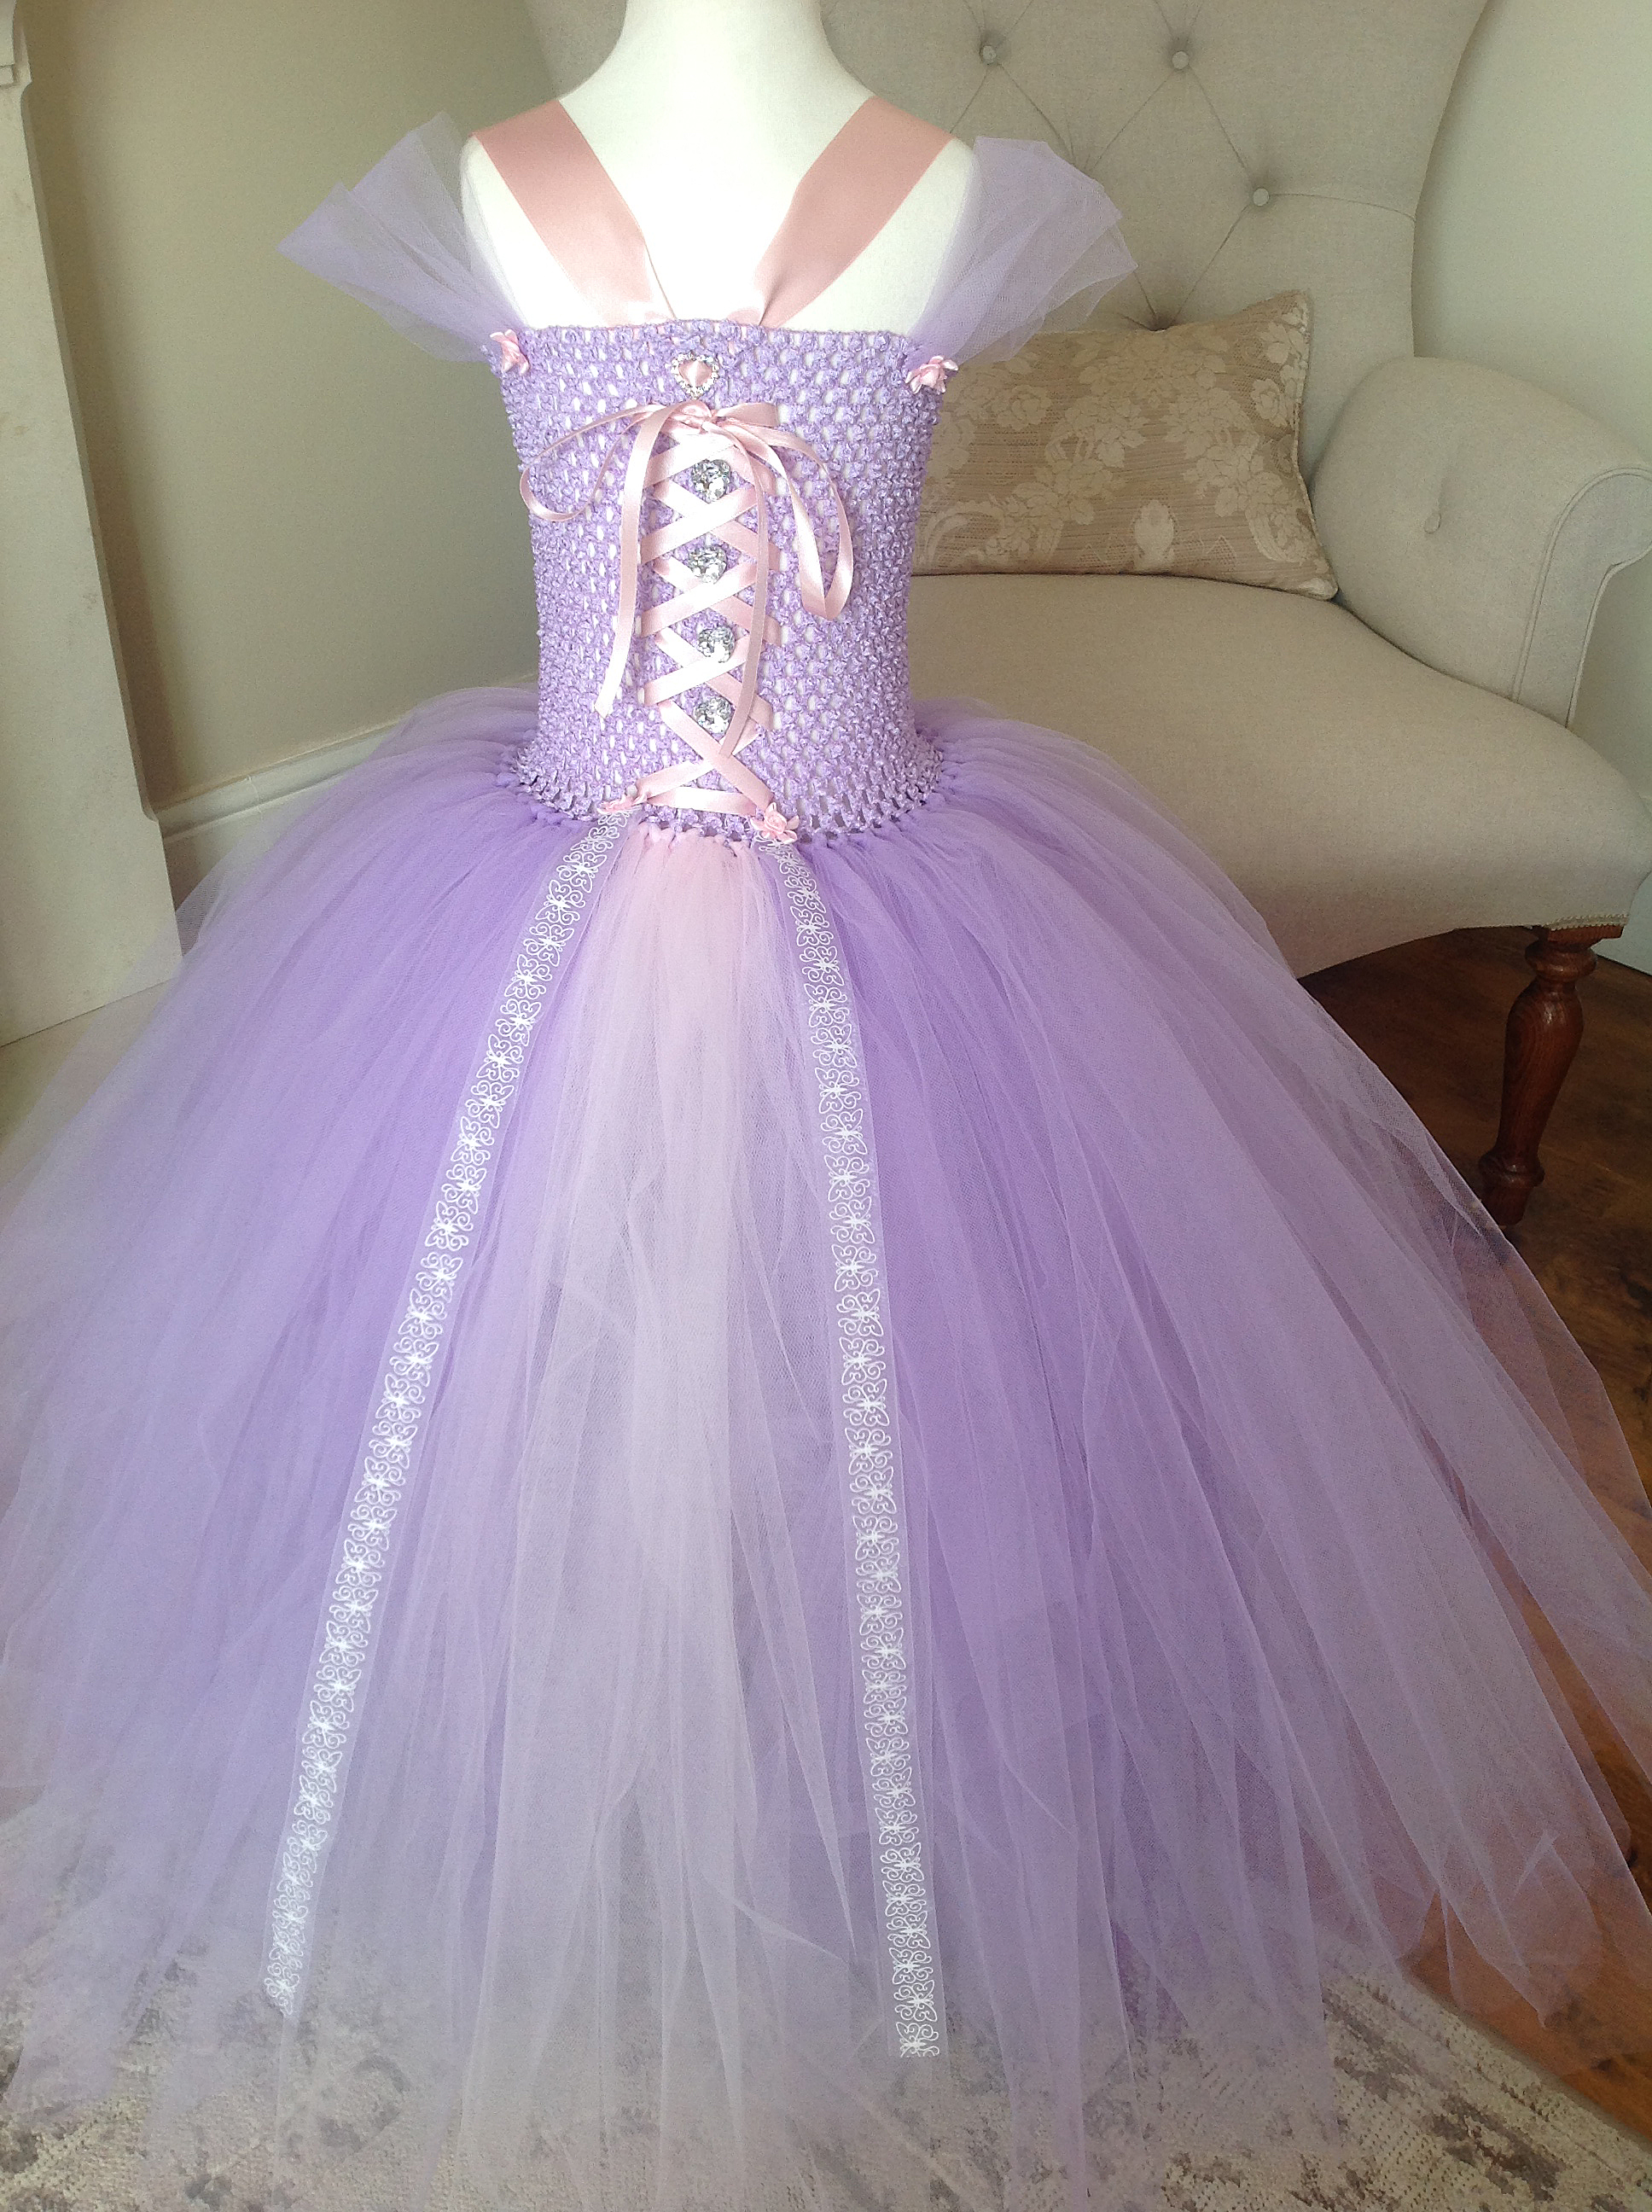 Sophia Princess Dress